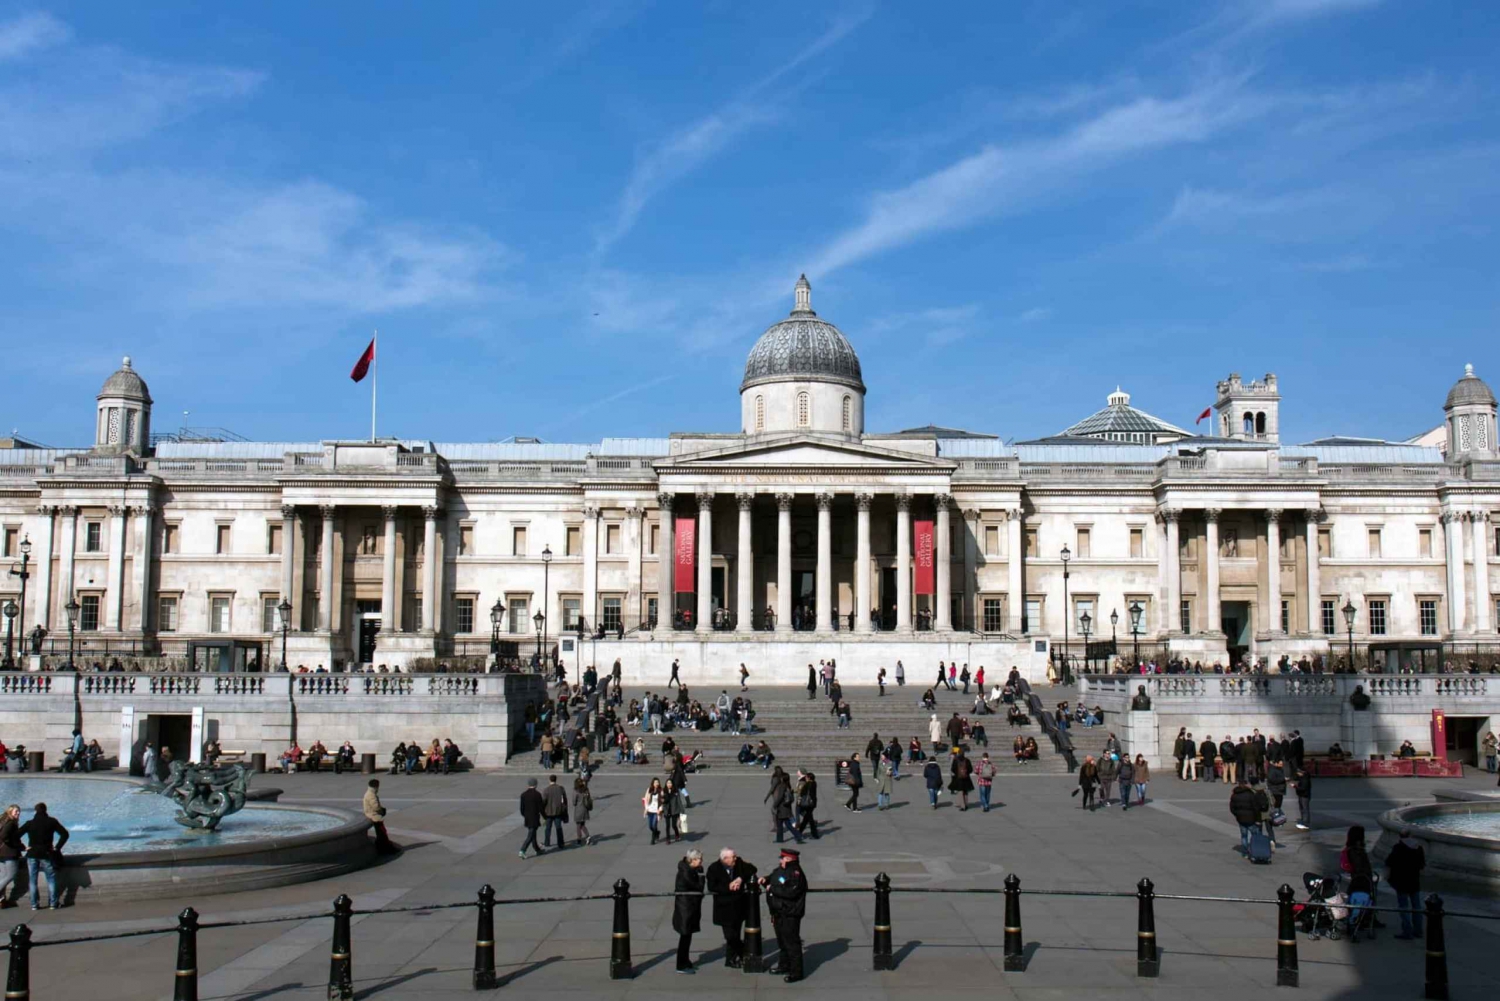 Londres : Murder Mystery Tour by Trafalgar Square (anglais)